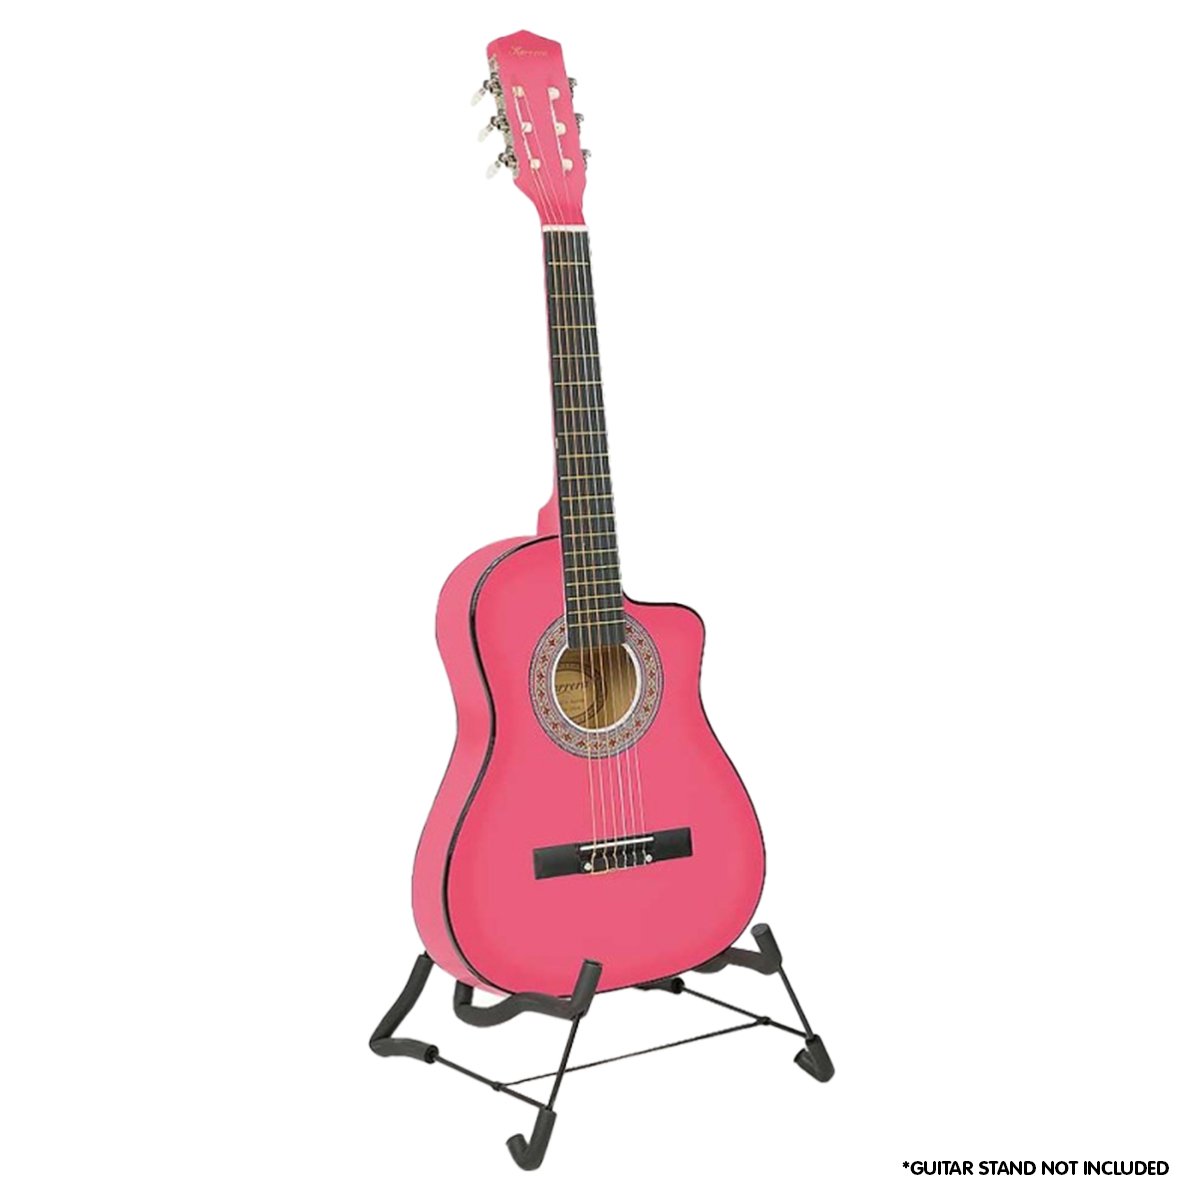 Karrera Childrens Acoustic Guitar Kids - Pink